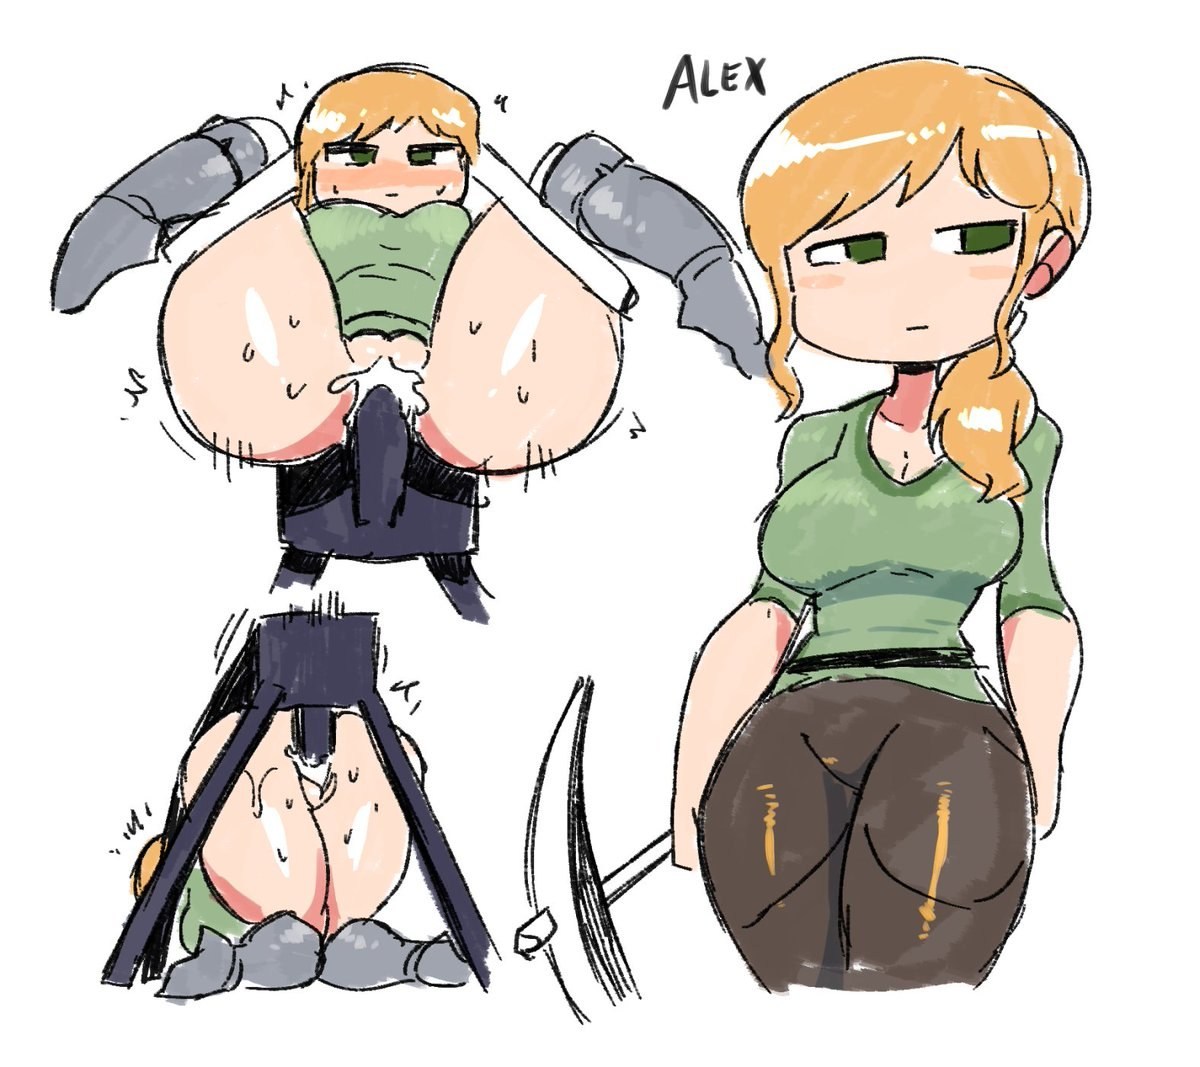 Sexy alex from minecraft